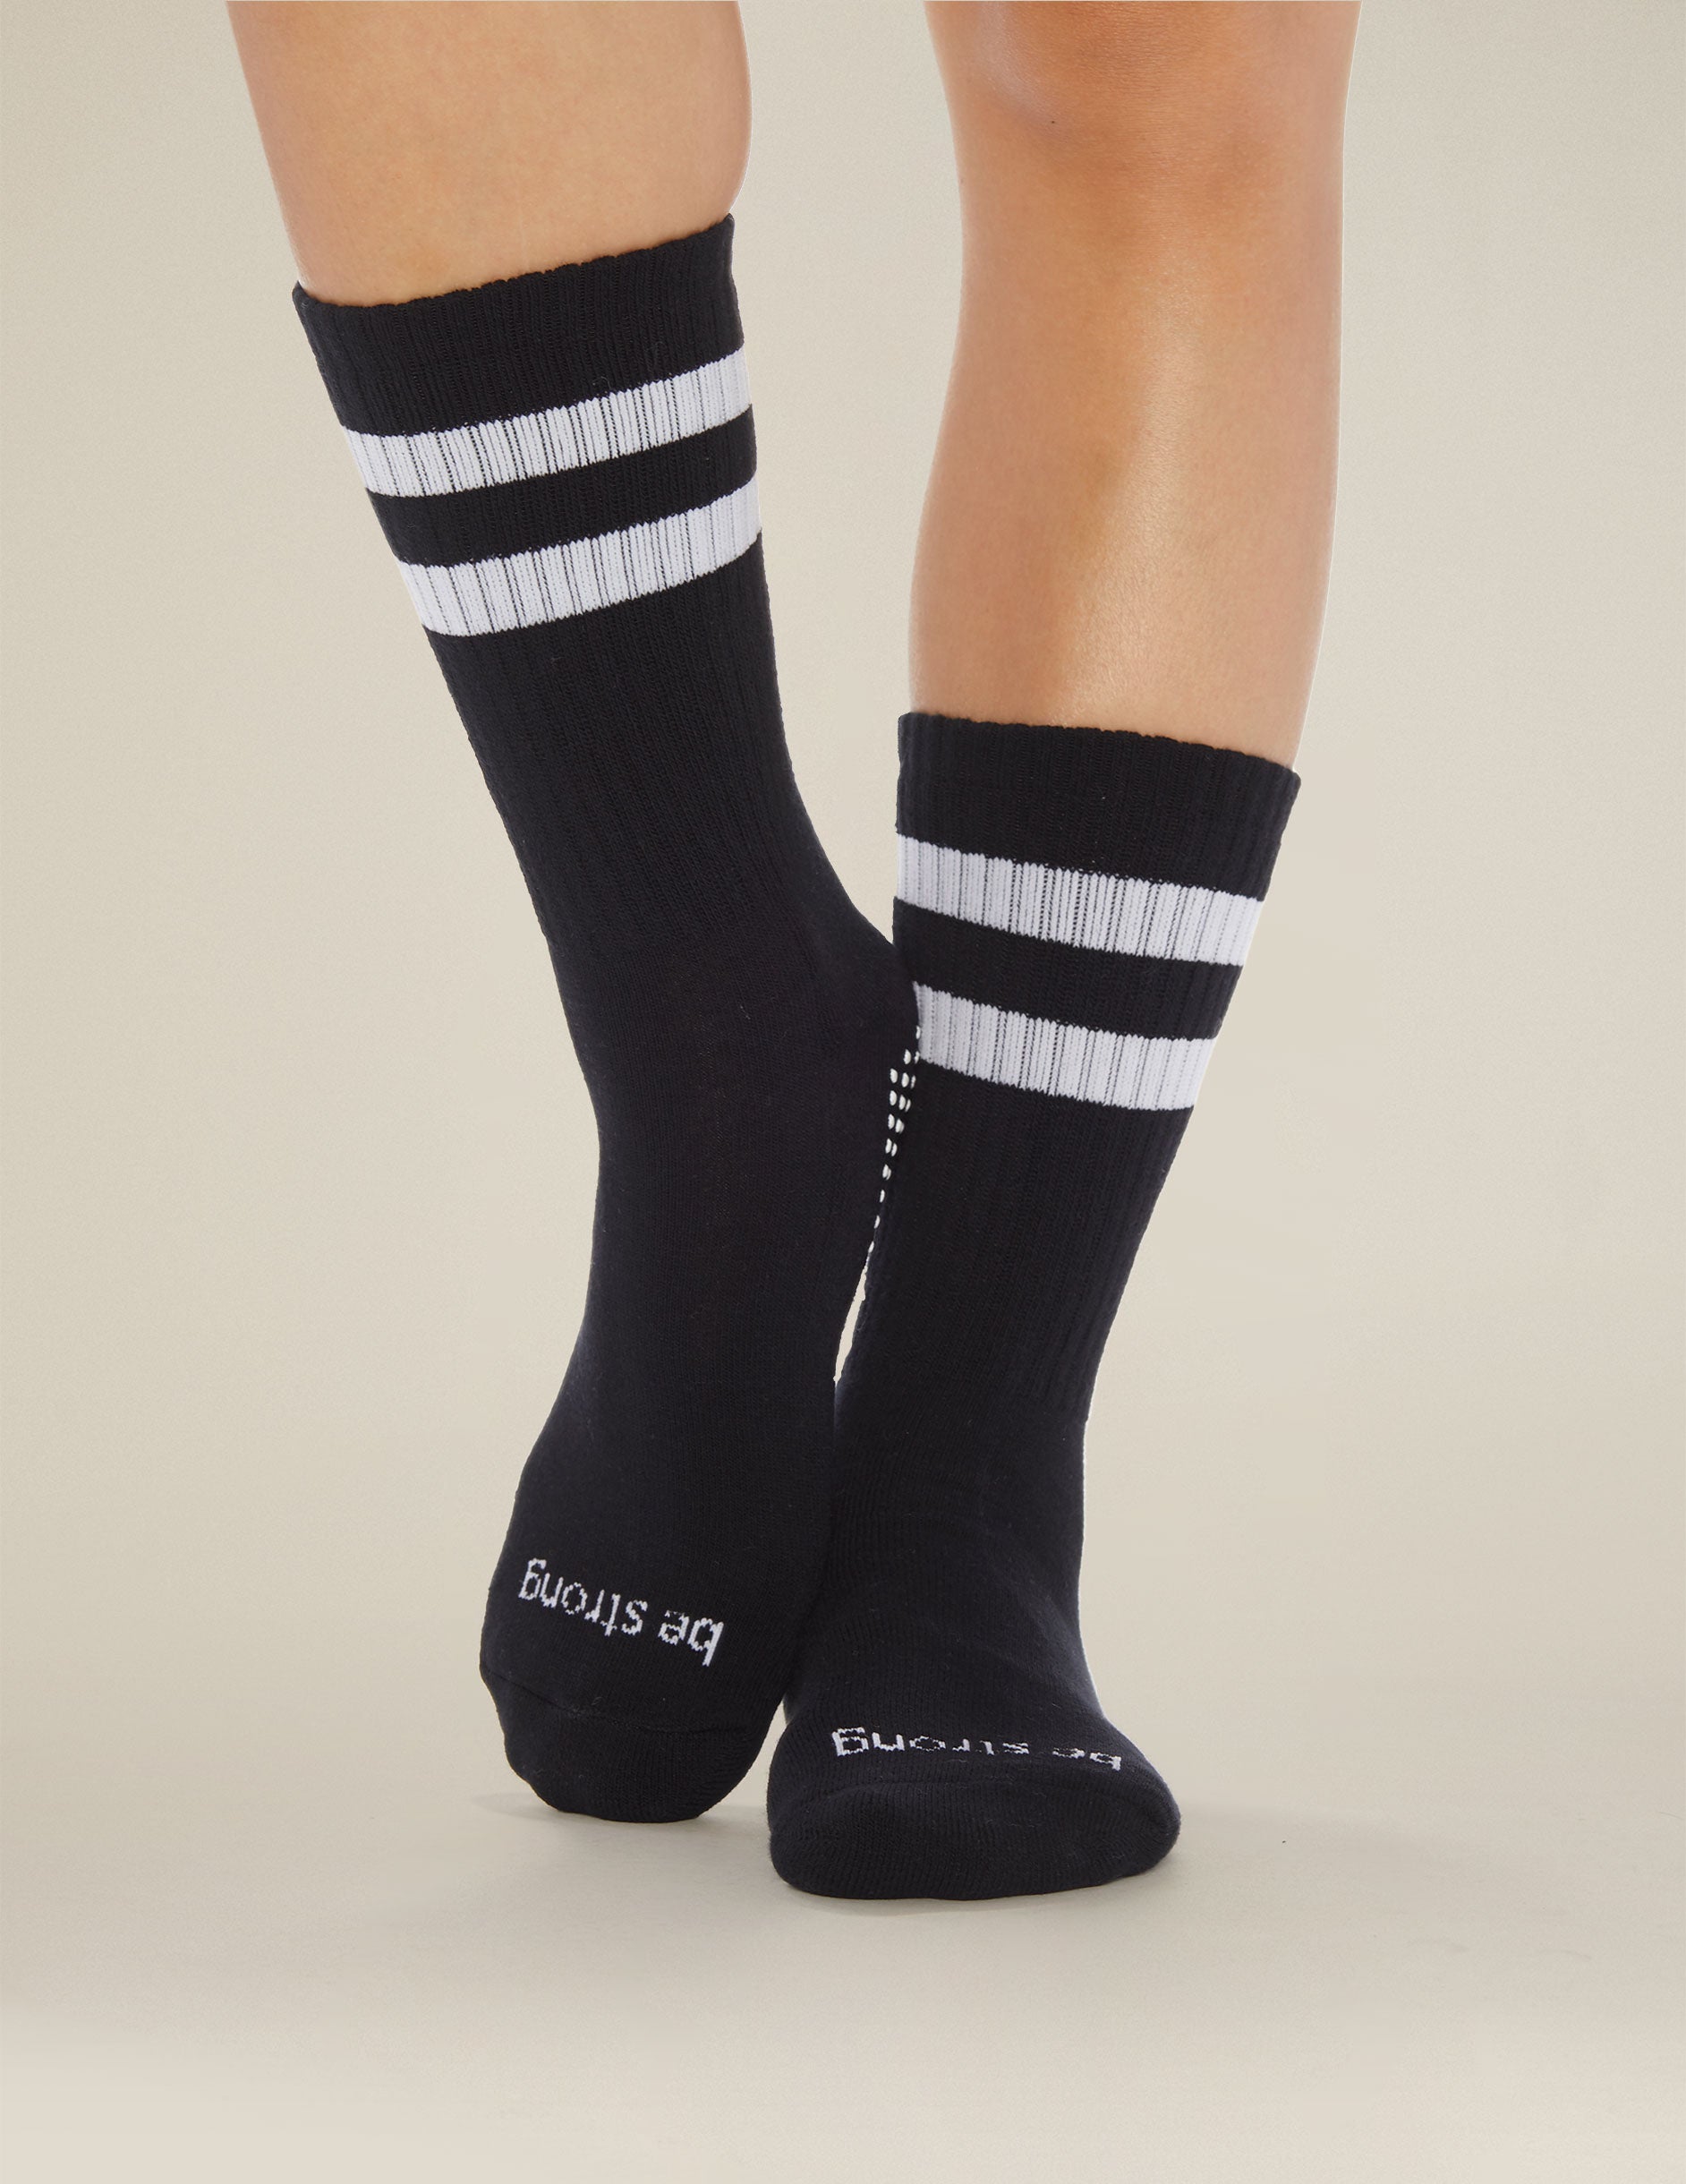 black crew length socks with white stripe detailing. 